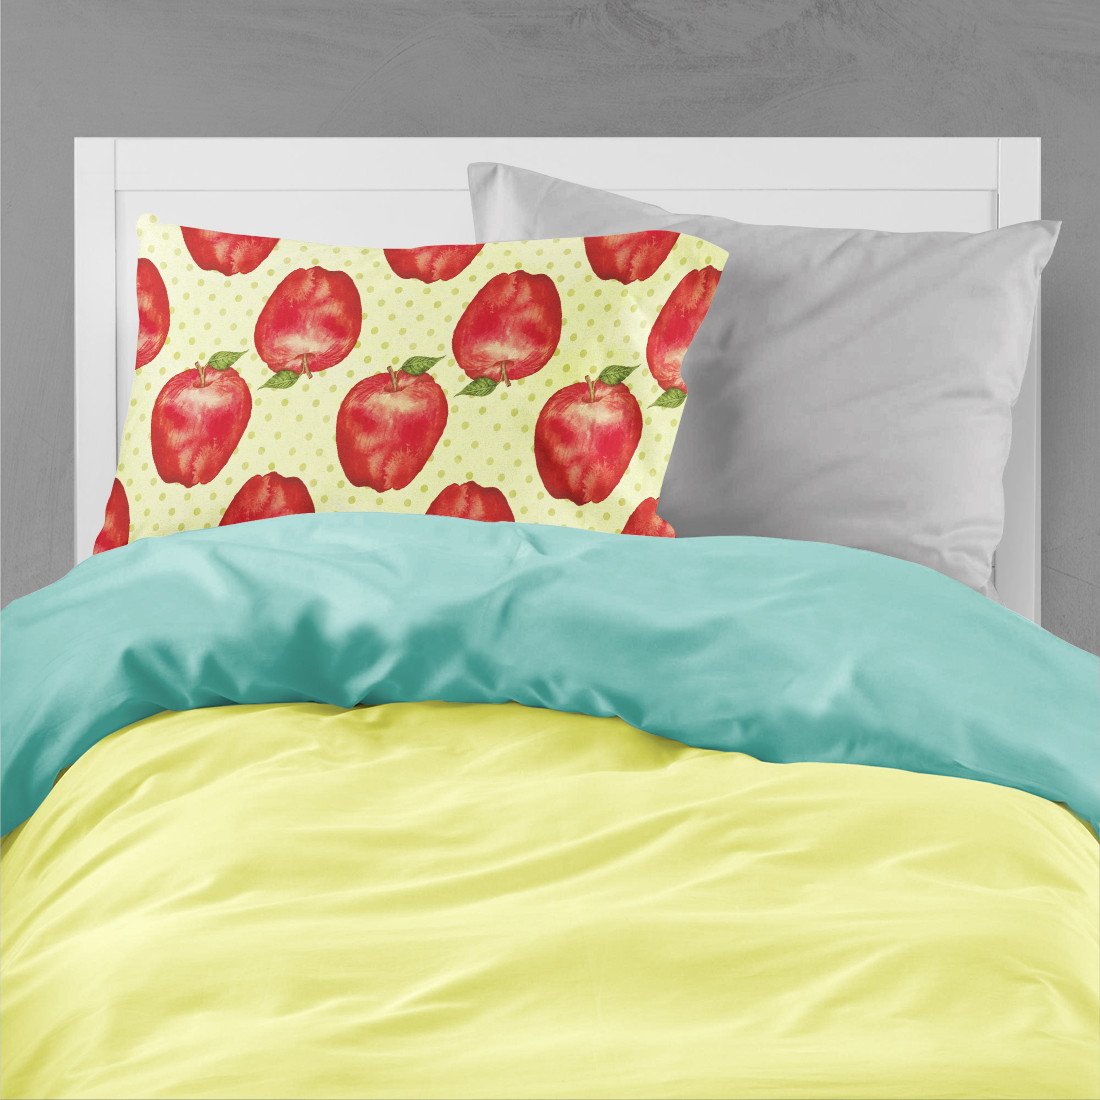 Watercolor Apples and Polkadots Fabric Standard Pillowcase BB7516PILLOWCASE by Caroline's Treasures